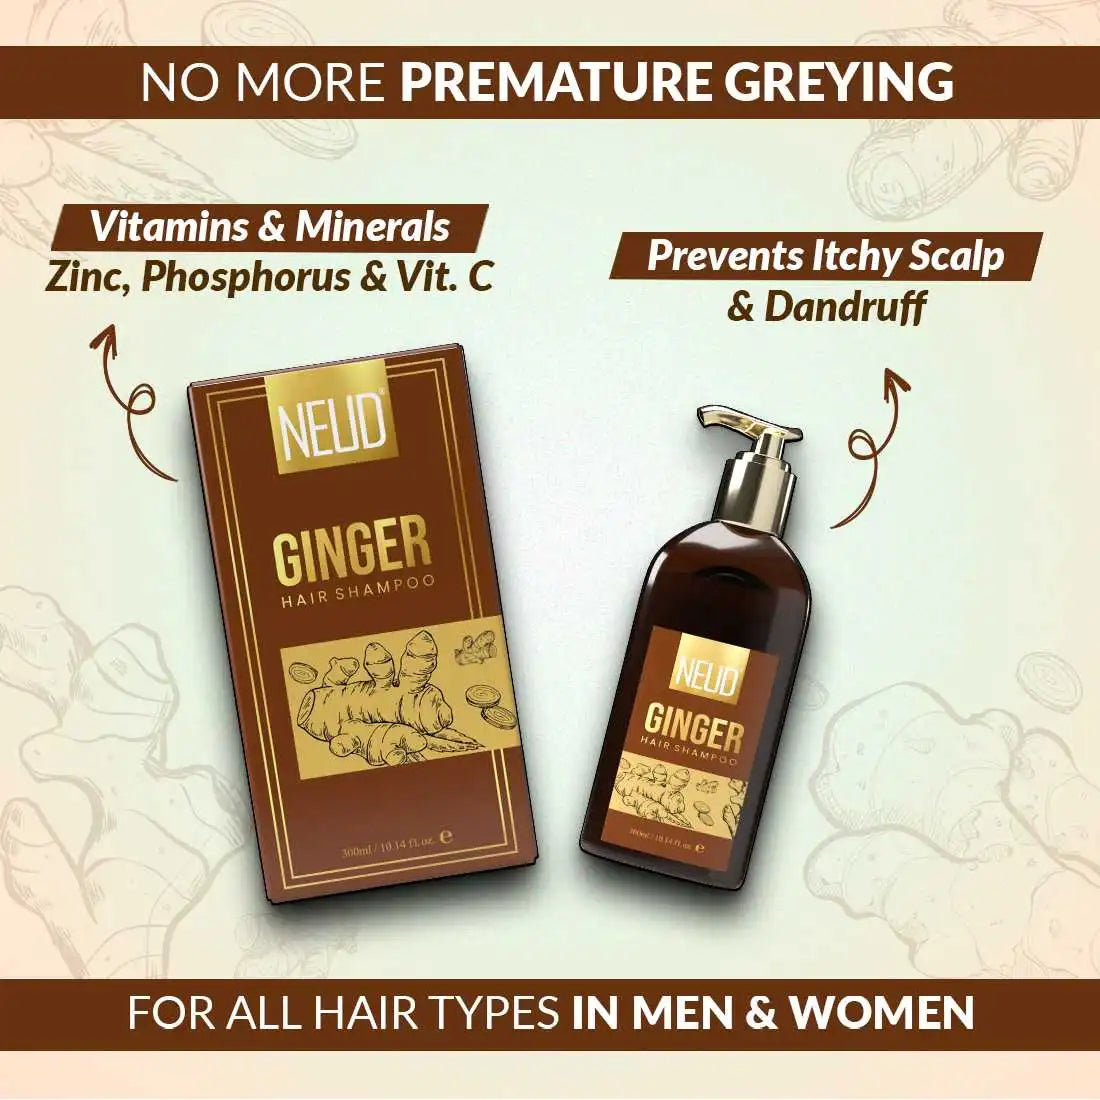 NEUD Ginger Hair Shampoo 300ml Helps Prevent Premature Graying in Men and Women - everteen-neud.com